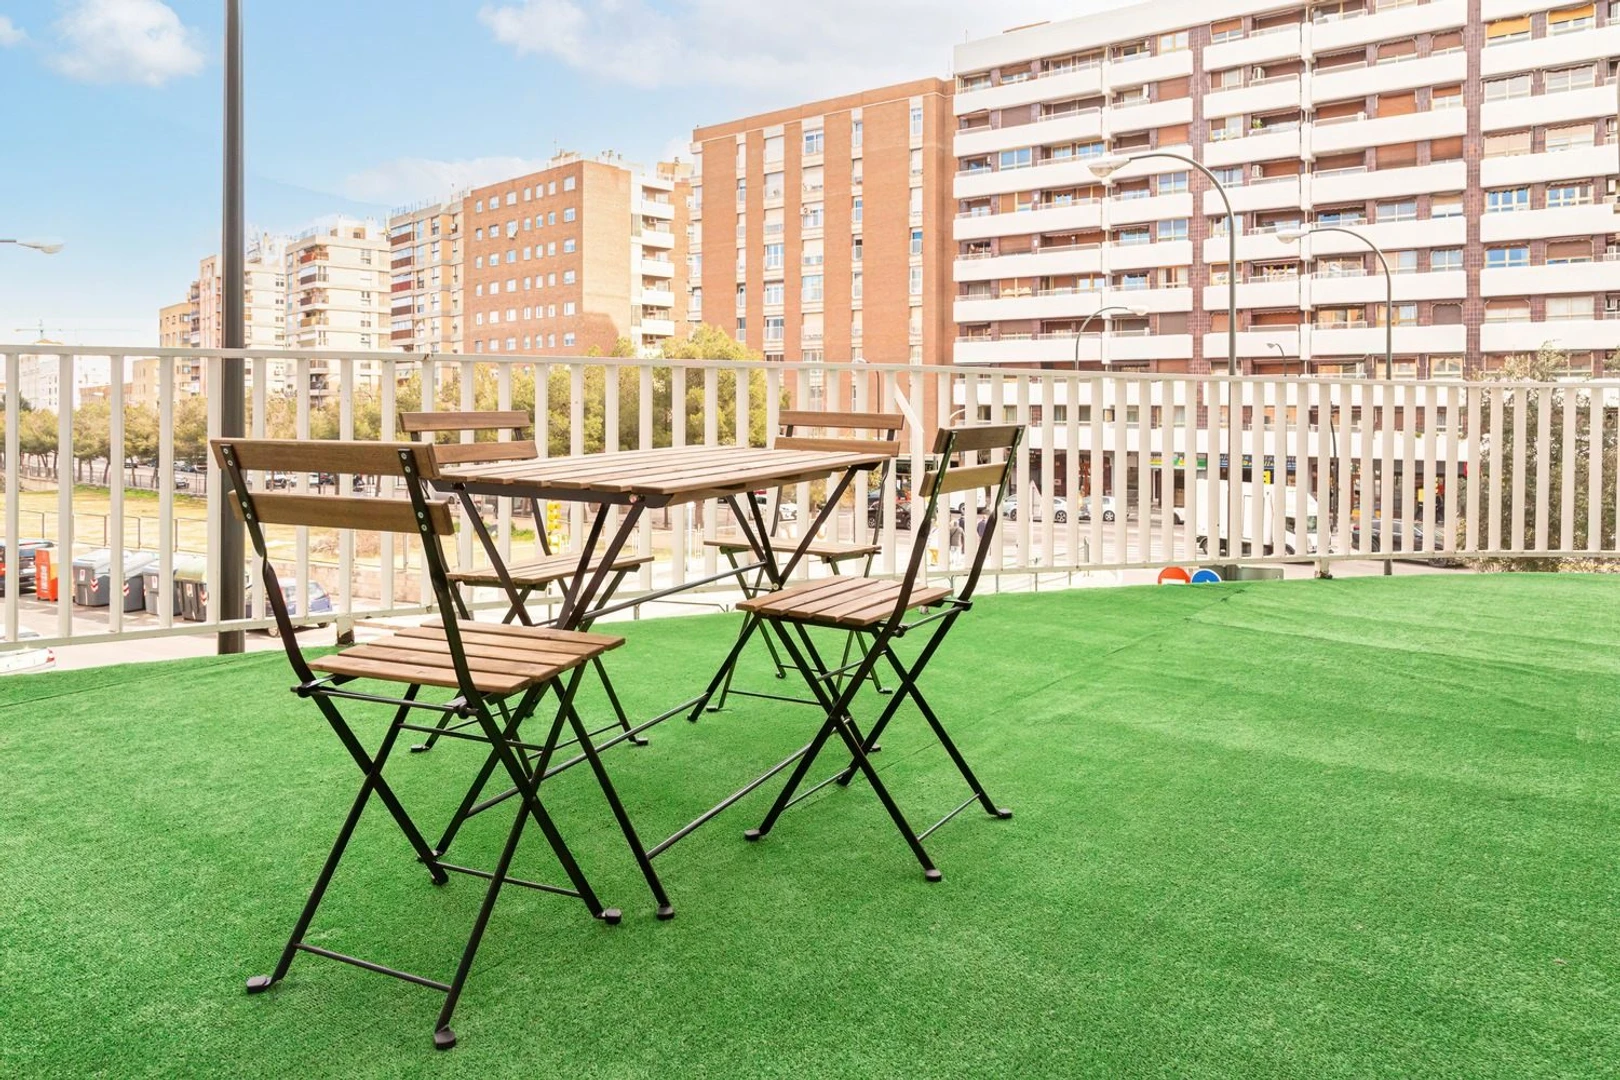 Habitación privada barata en Zaragoza